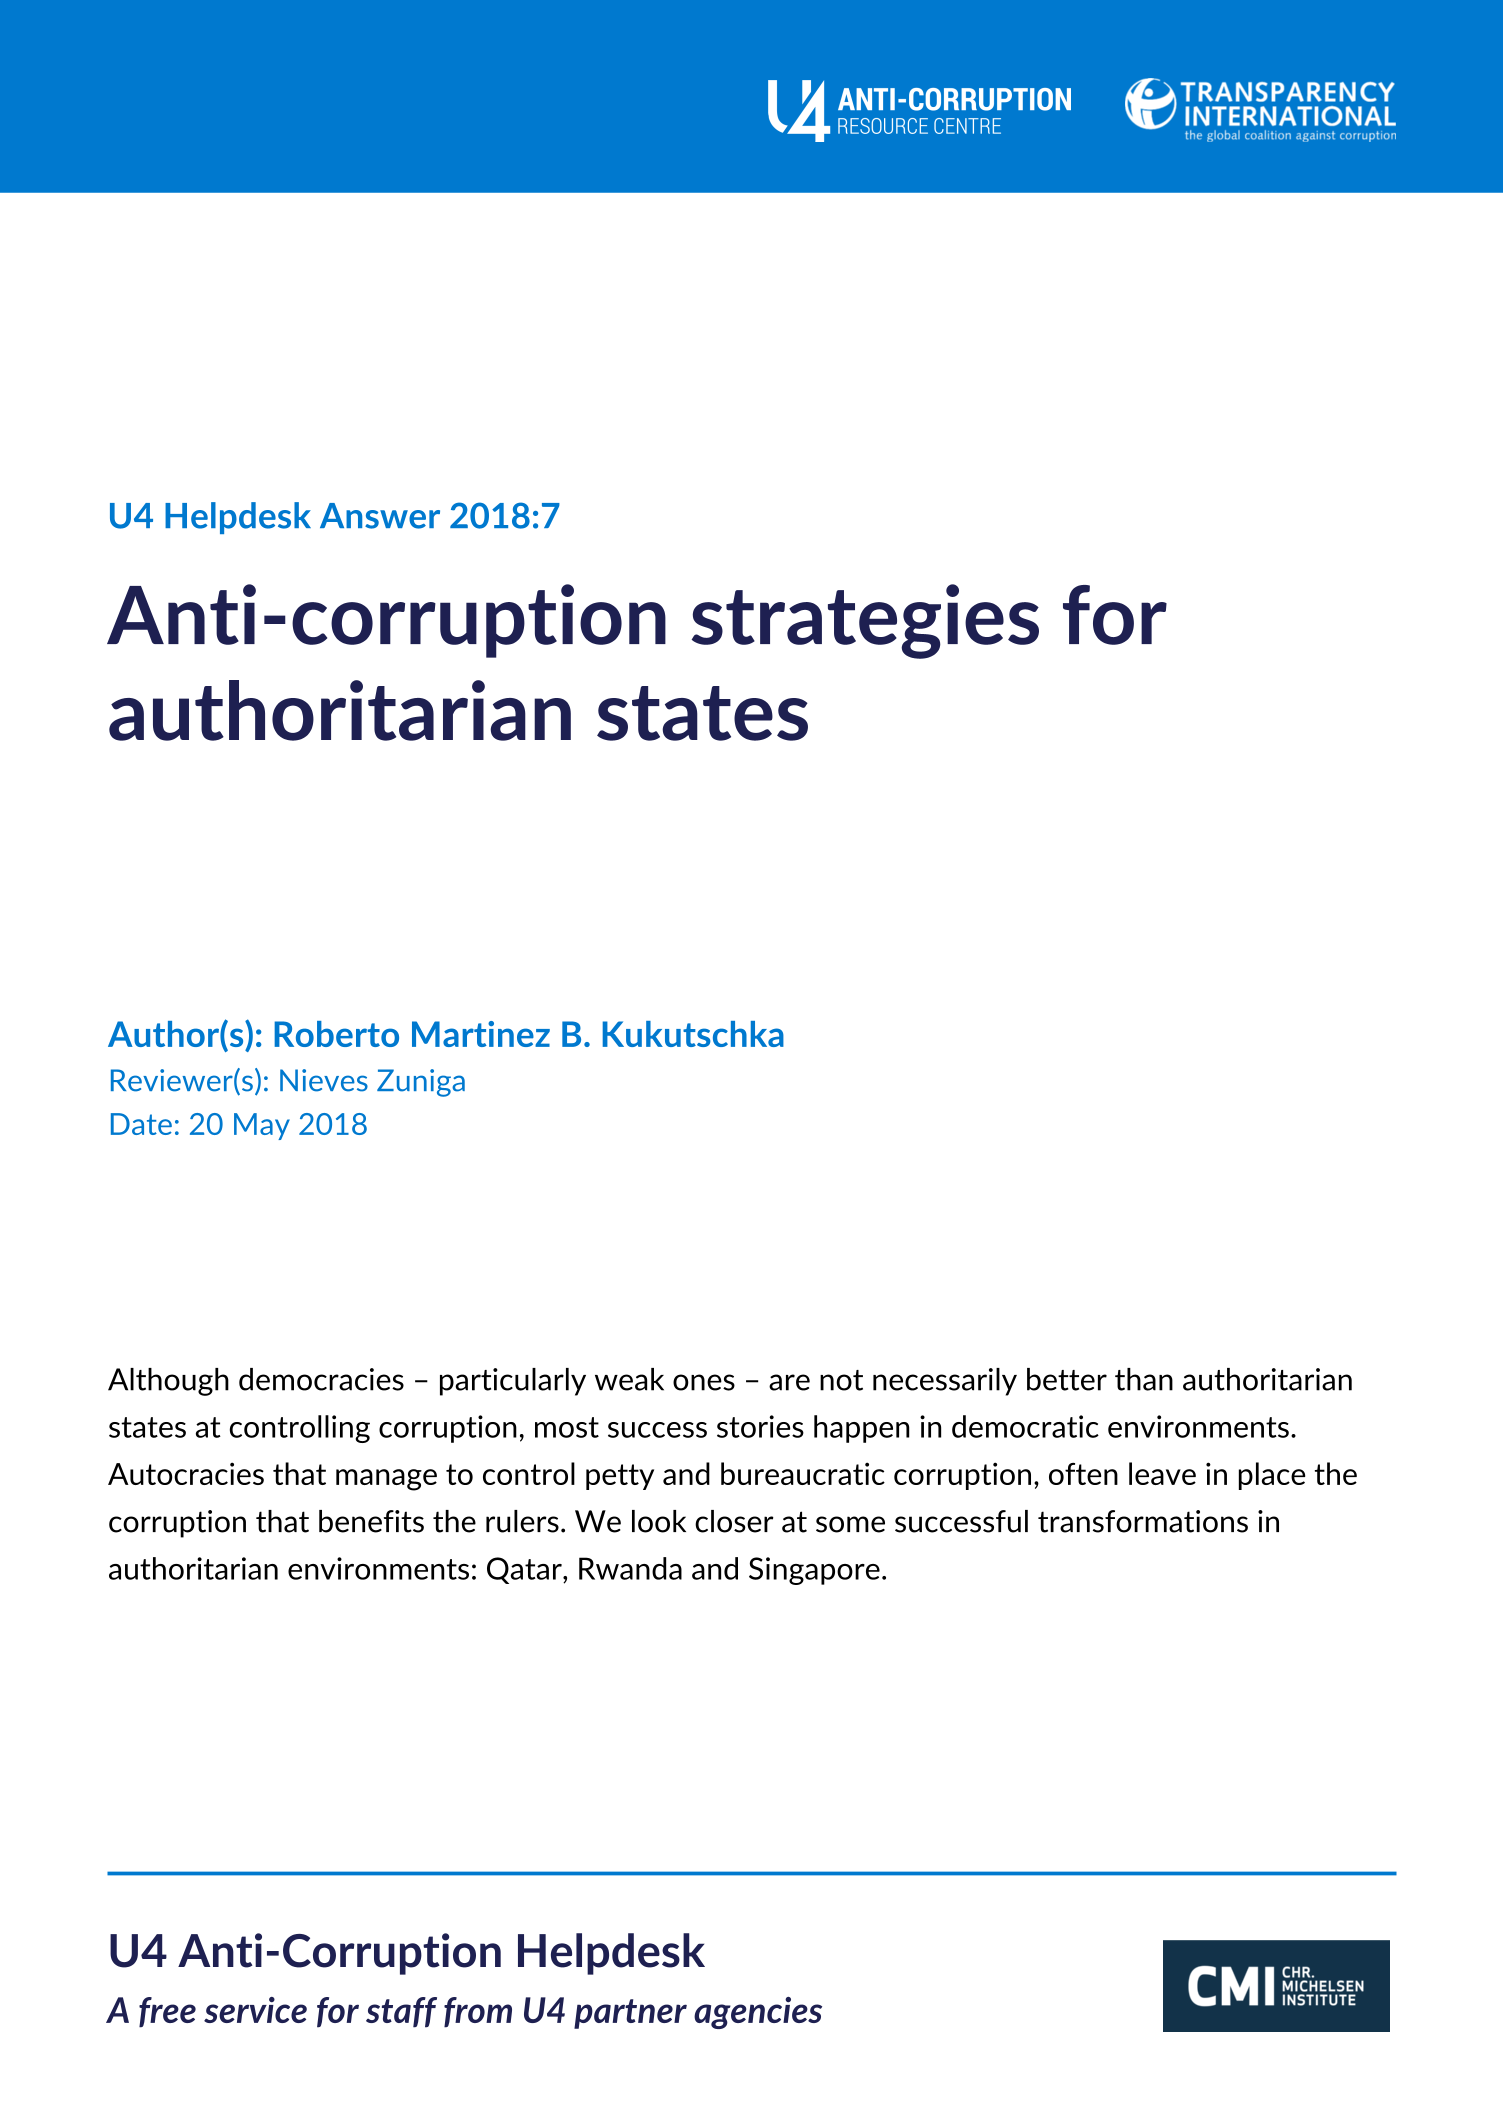 Anti-corruption strategies for authoritarian states